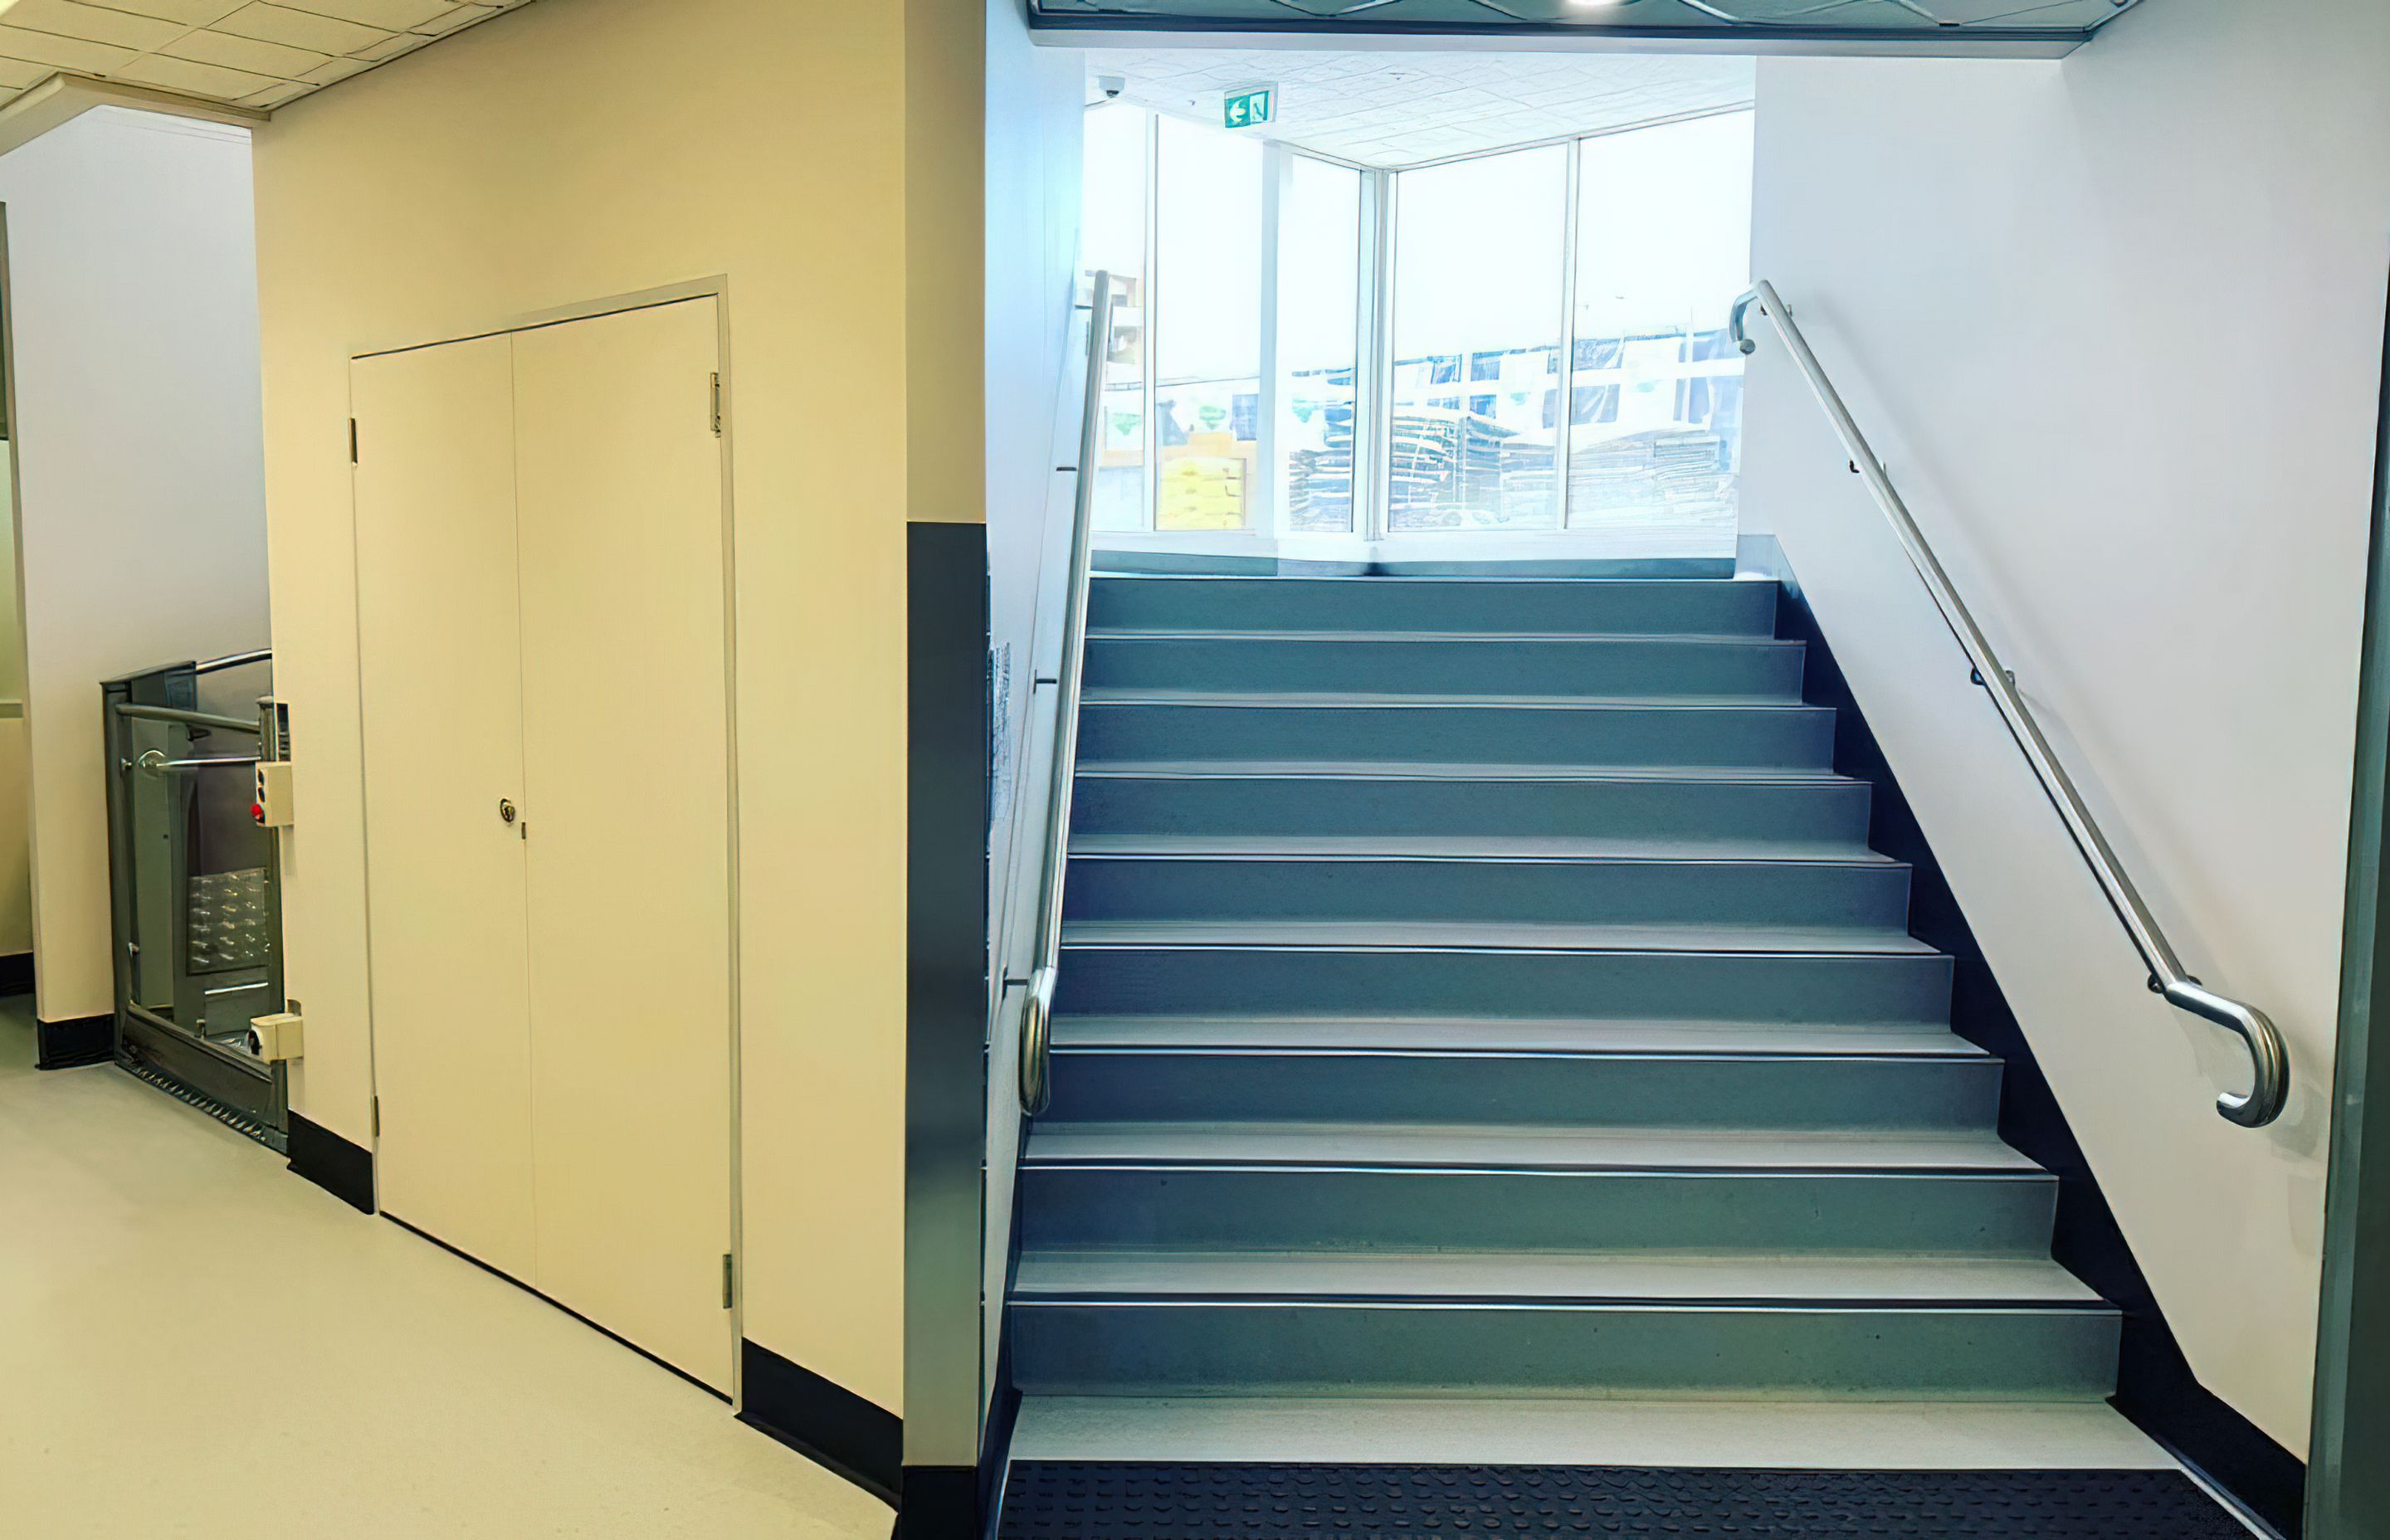 Royal Dental Hospital - Entry Foyer And Link Corridor